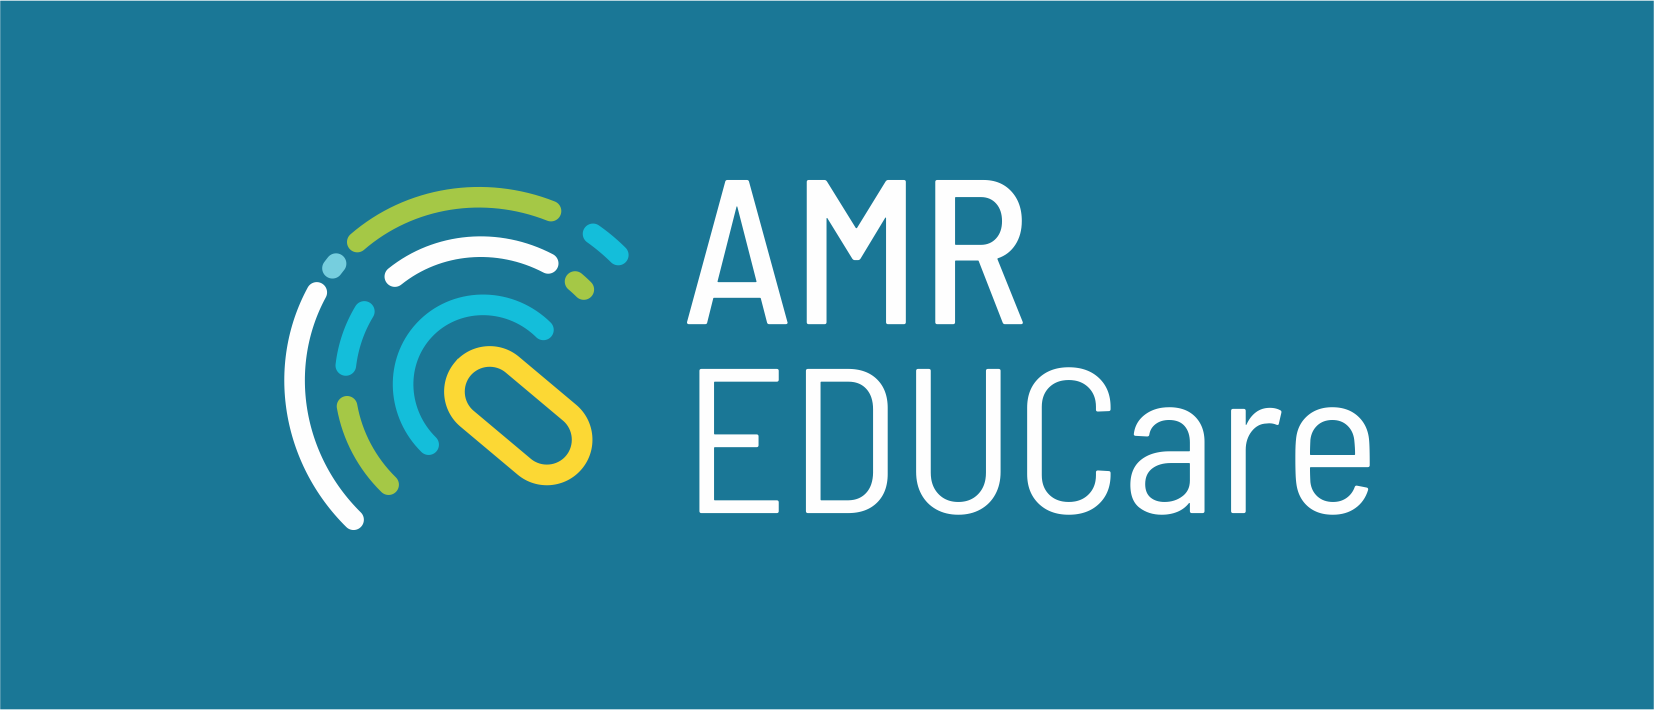 AMR EDUCare project